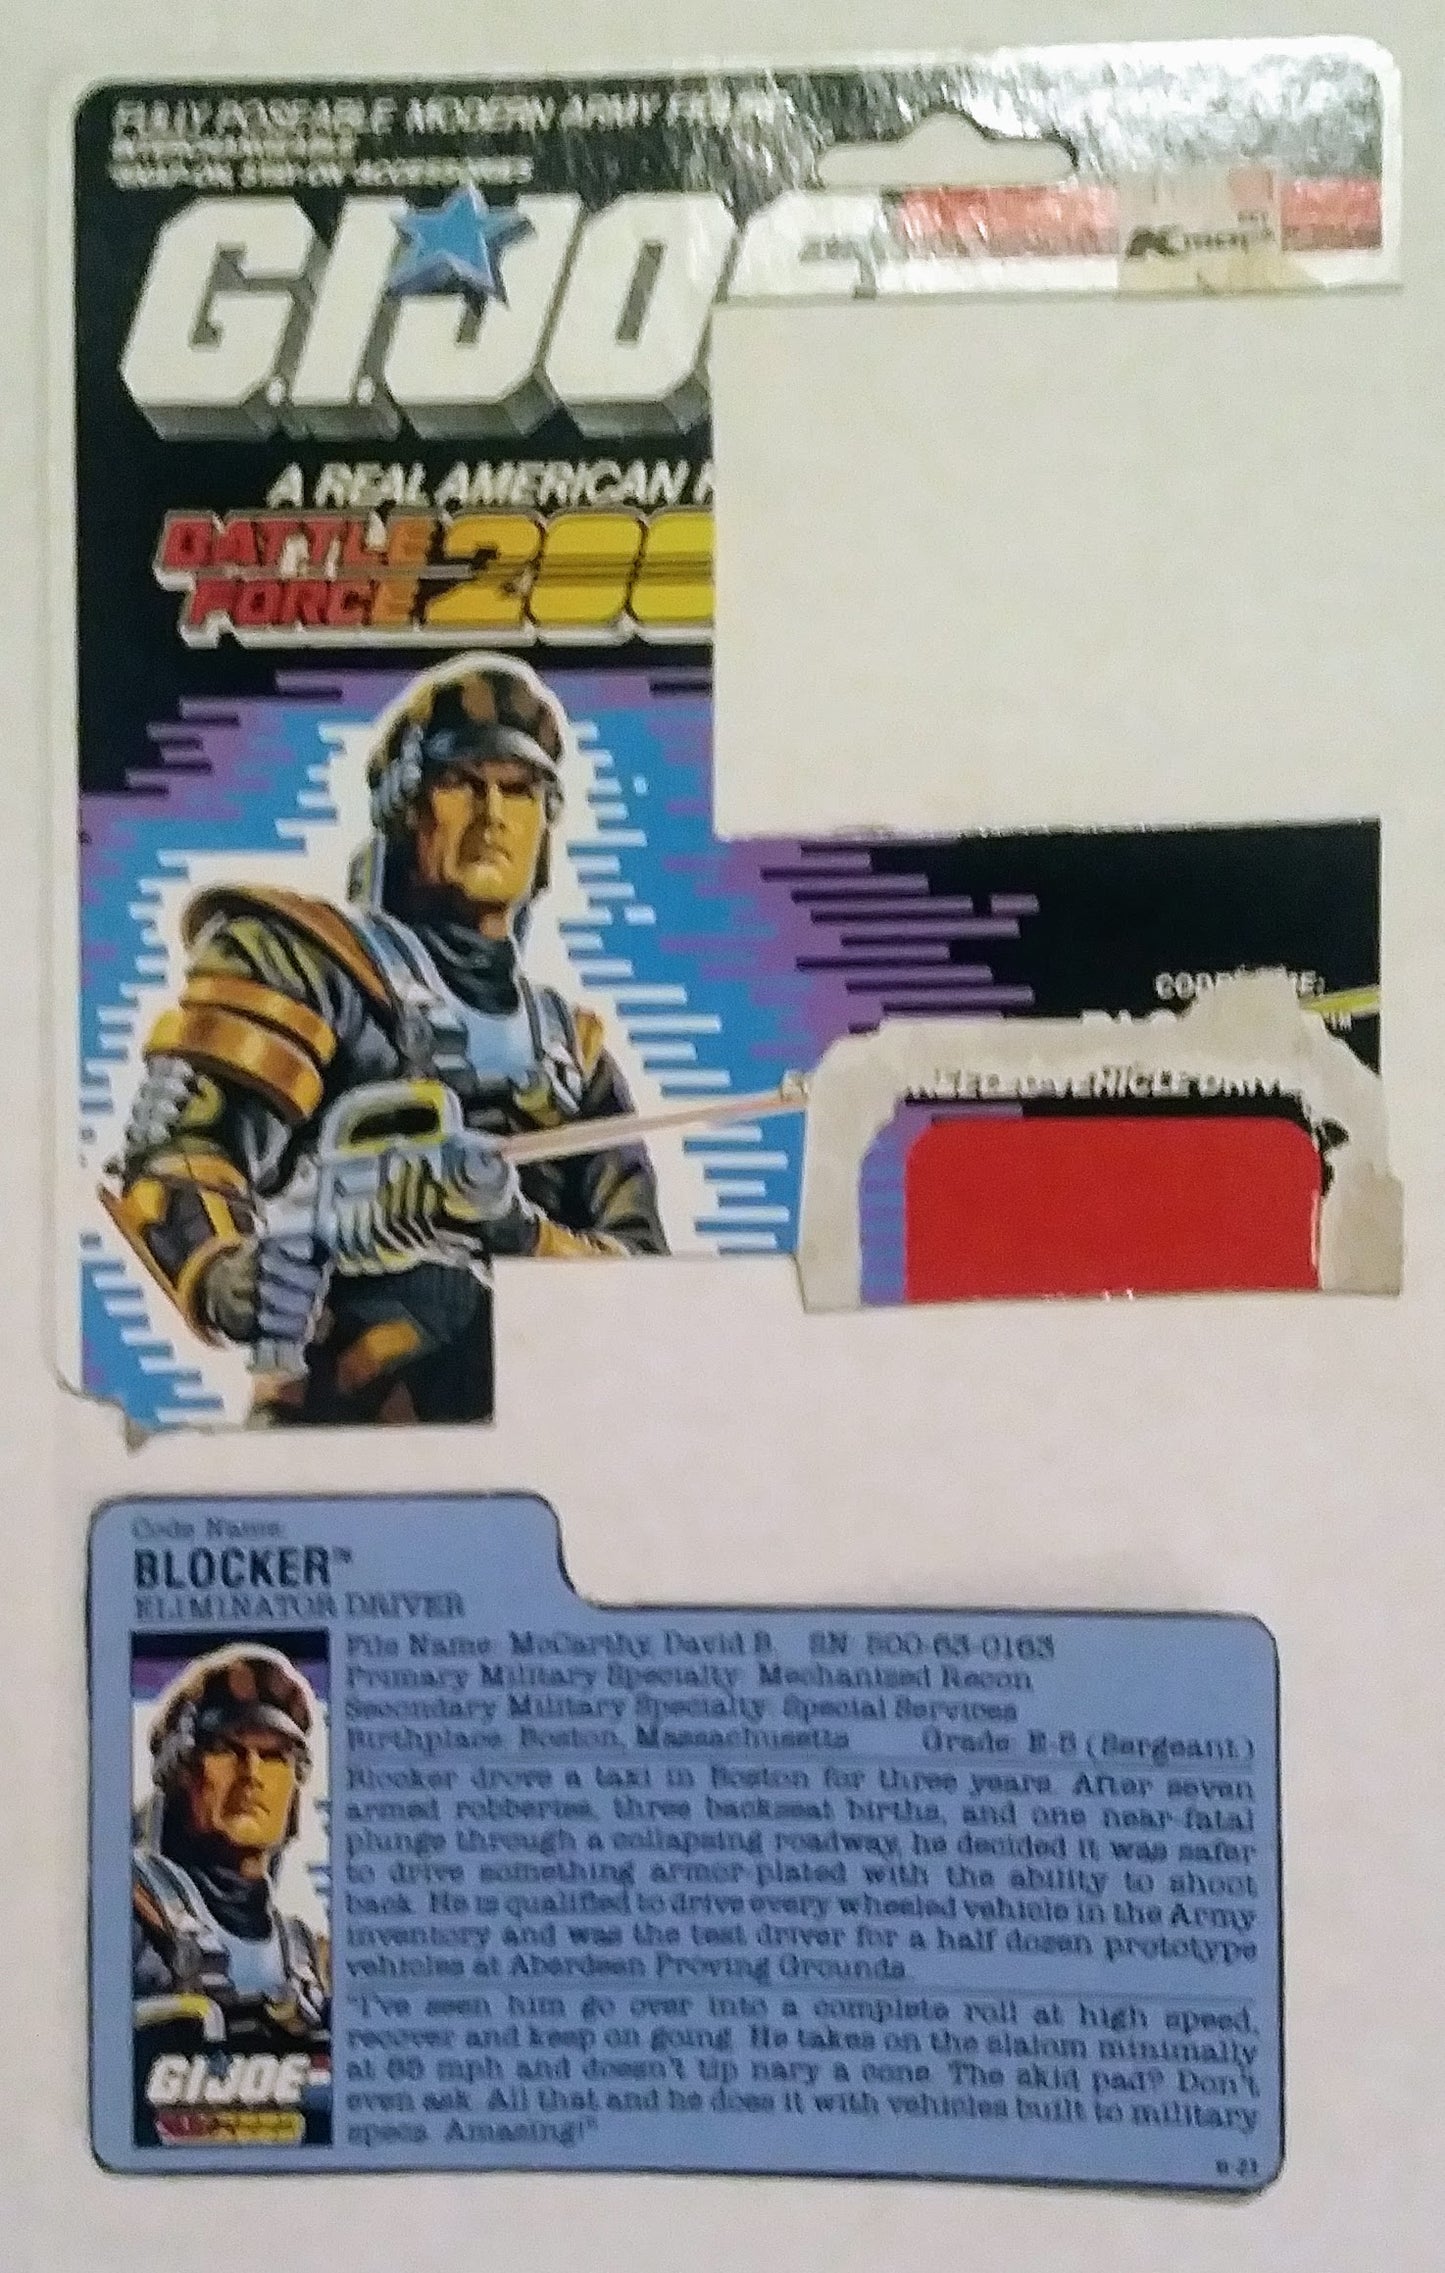 G.I. Joe action figure - Blocker (Eliminator Driver)